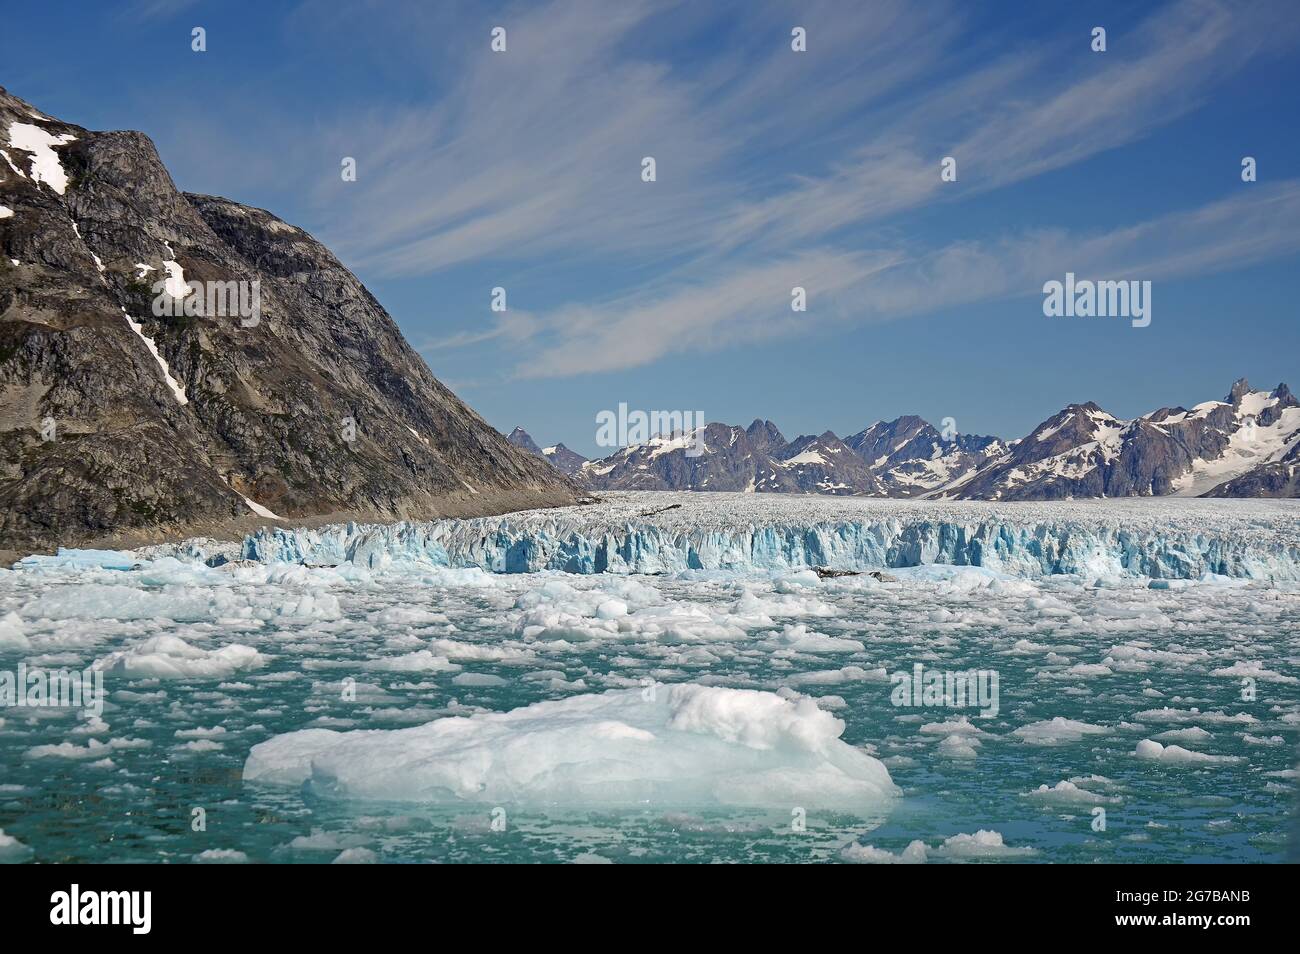 Pieces of ice in front of glacier, barren mountains, Knud Rasmussen Glacier, Tasilaq, Greenland, Denmark Stock Photo